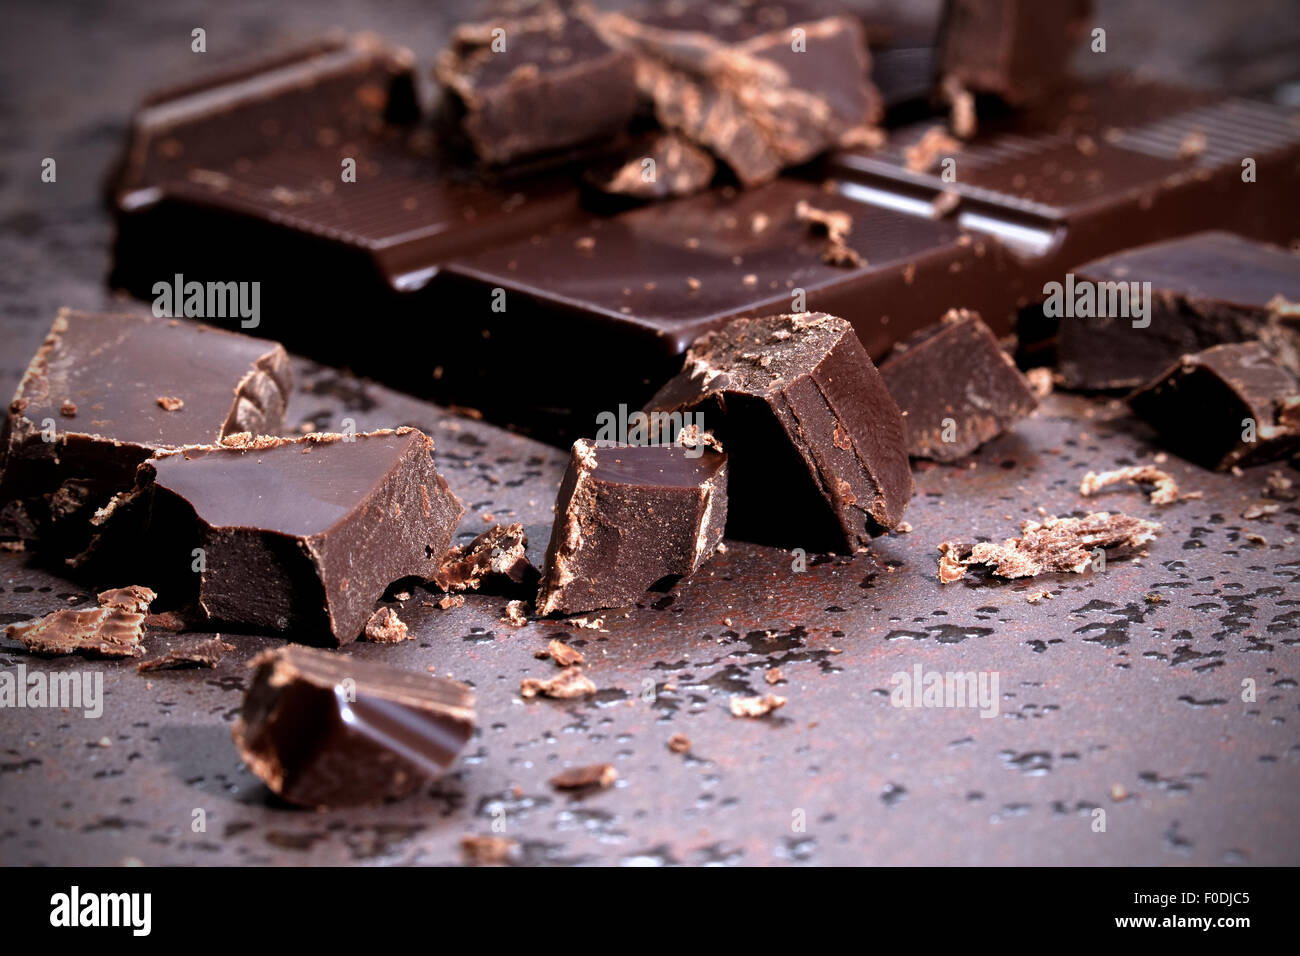 Dark chocolate on a stone table Stock Photo